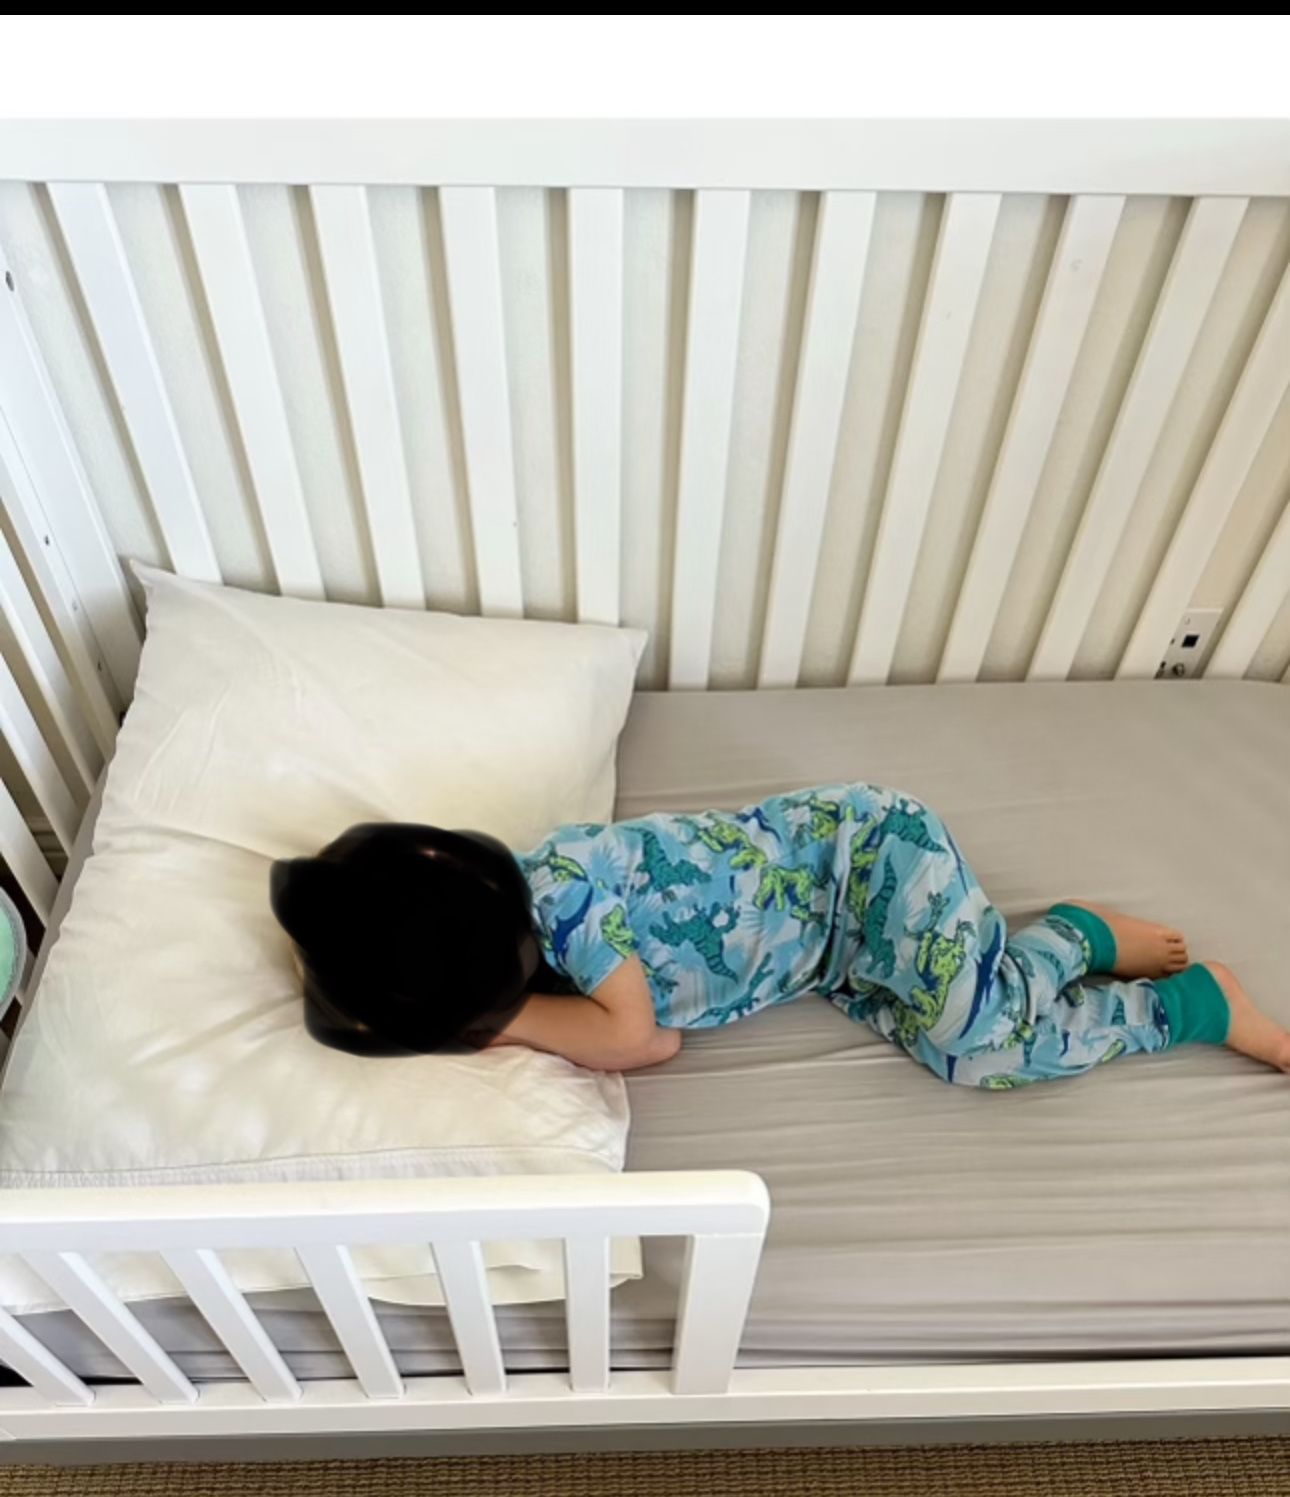 Convertible Baby Crib 